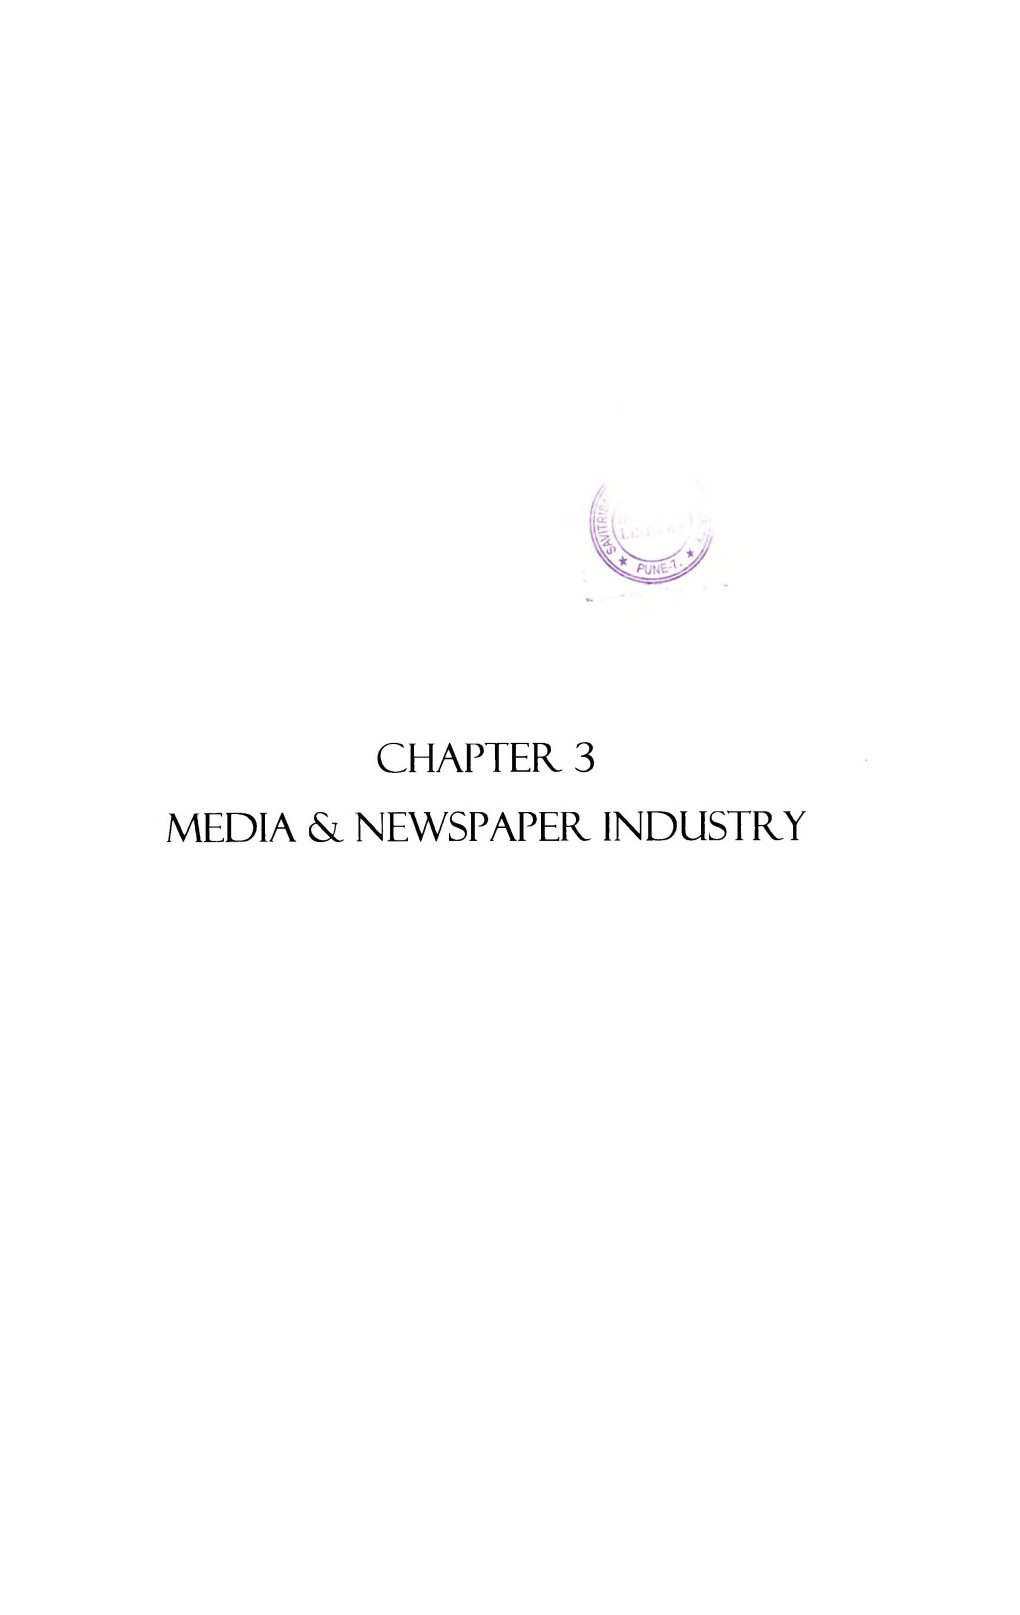 Chaptefl 3 Media & Newspaper Industry